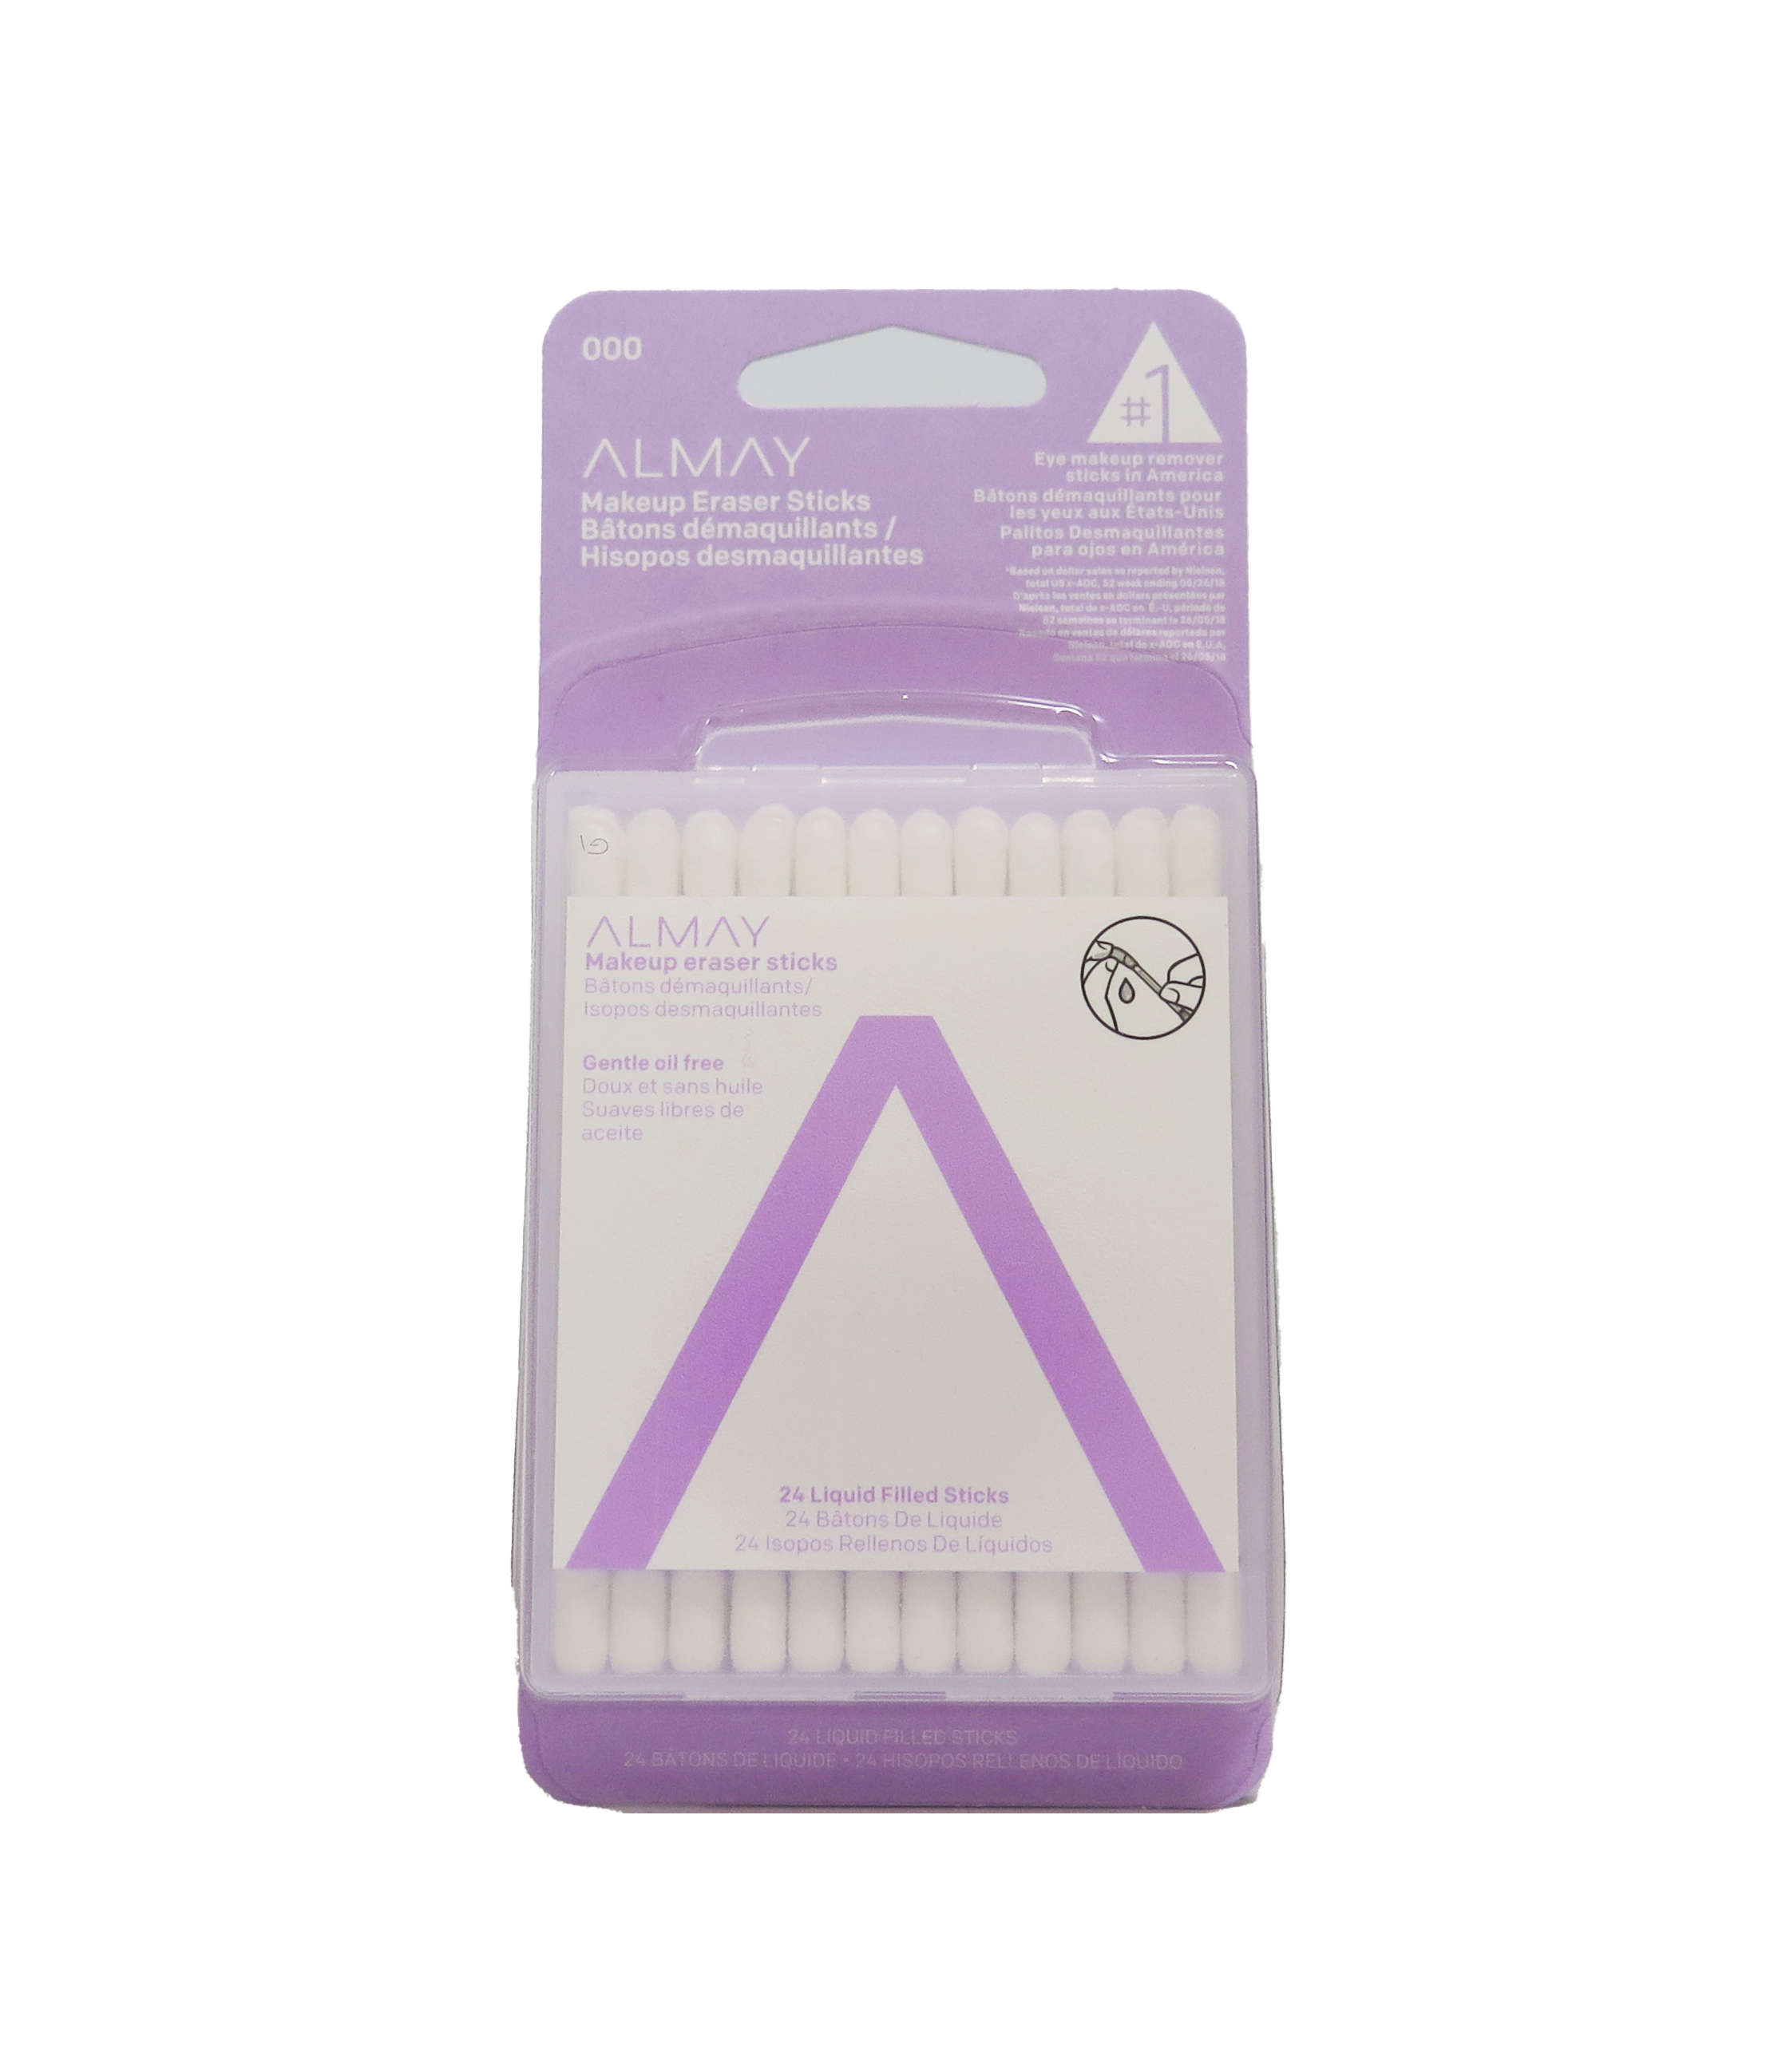 Almay Oil Free Makeup Eraser Sticks